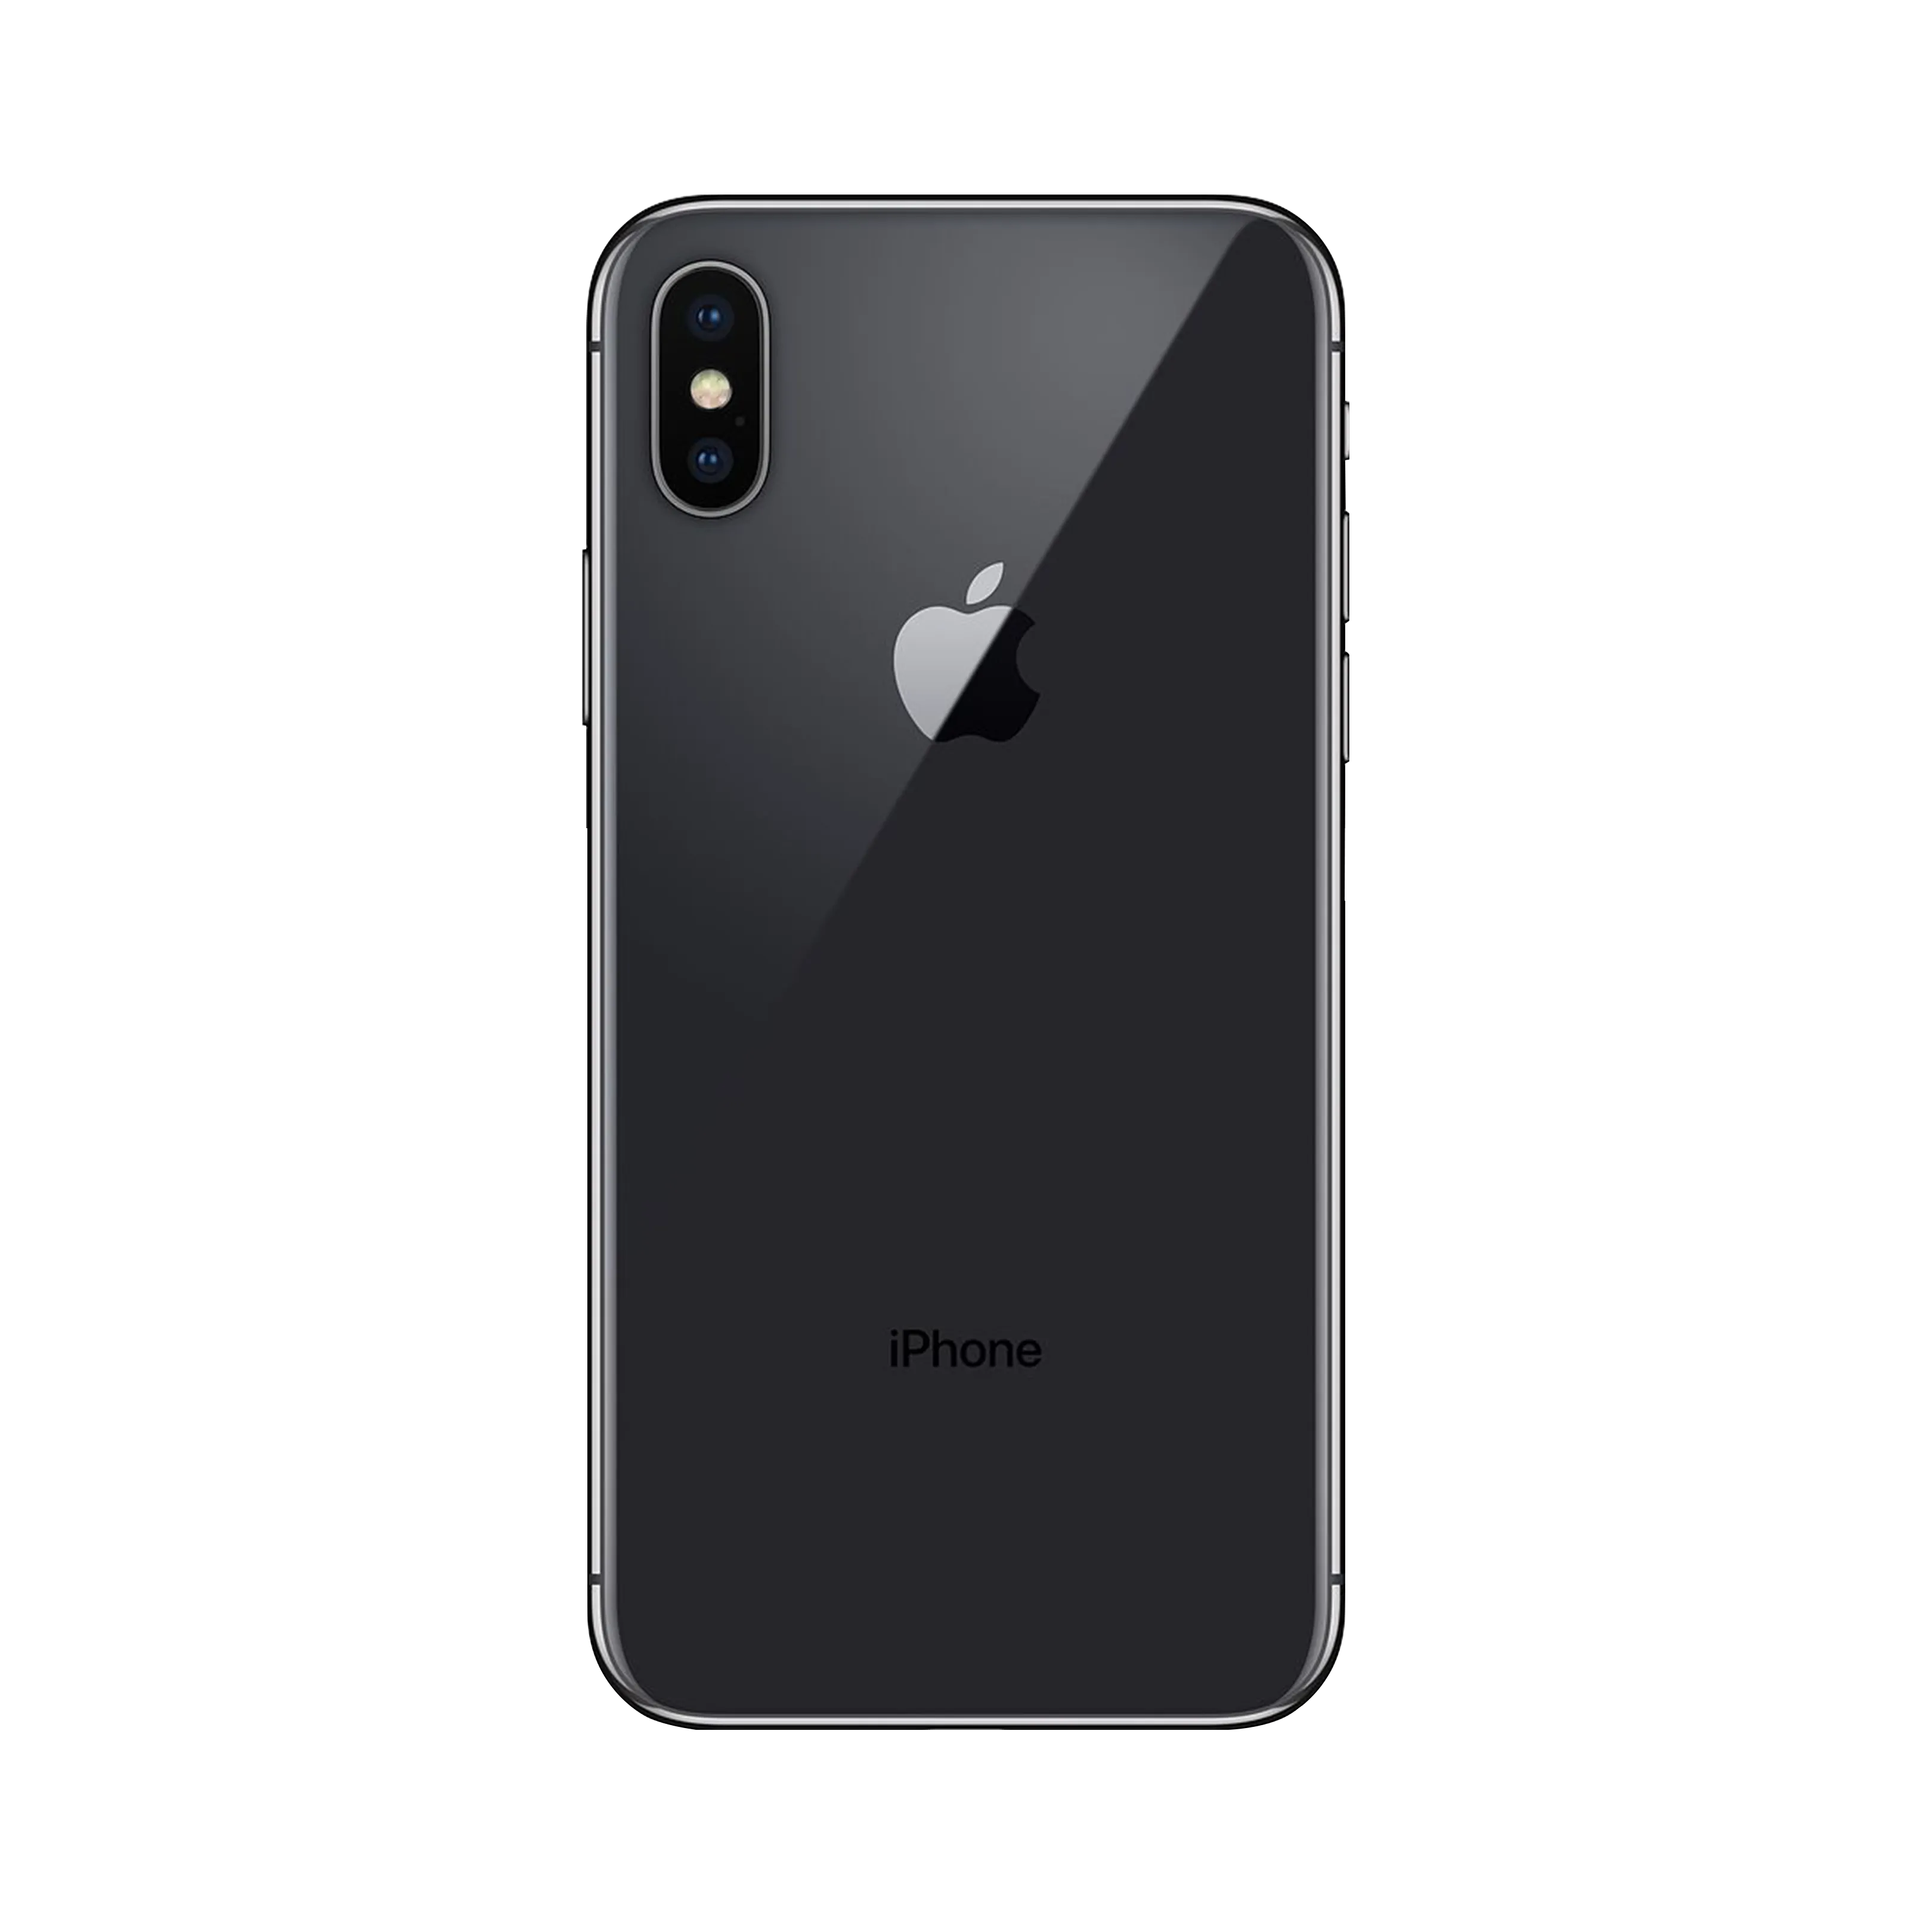 Iphone 8 max 256gb. Apple iphone XR 64gb Black. Iphone 8 Plus 64gb Space Gray. Iphone 8 Space Gray 64gb. Apple iphone XR 64gb черный.